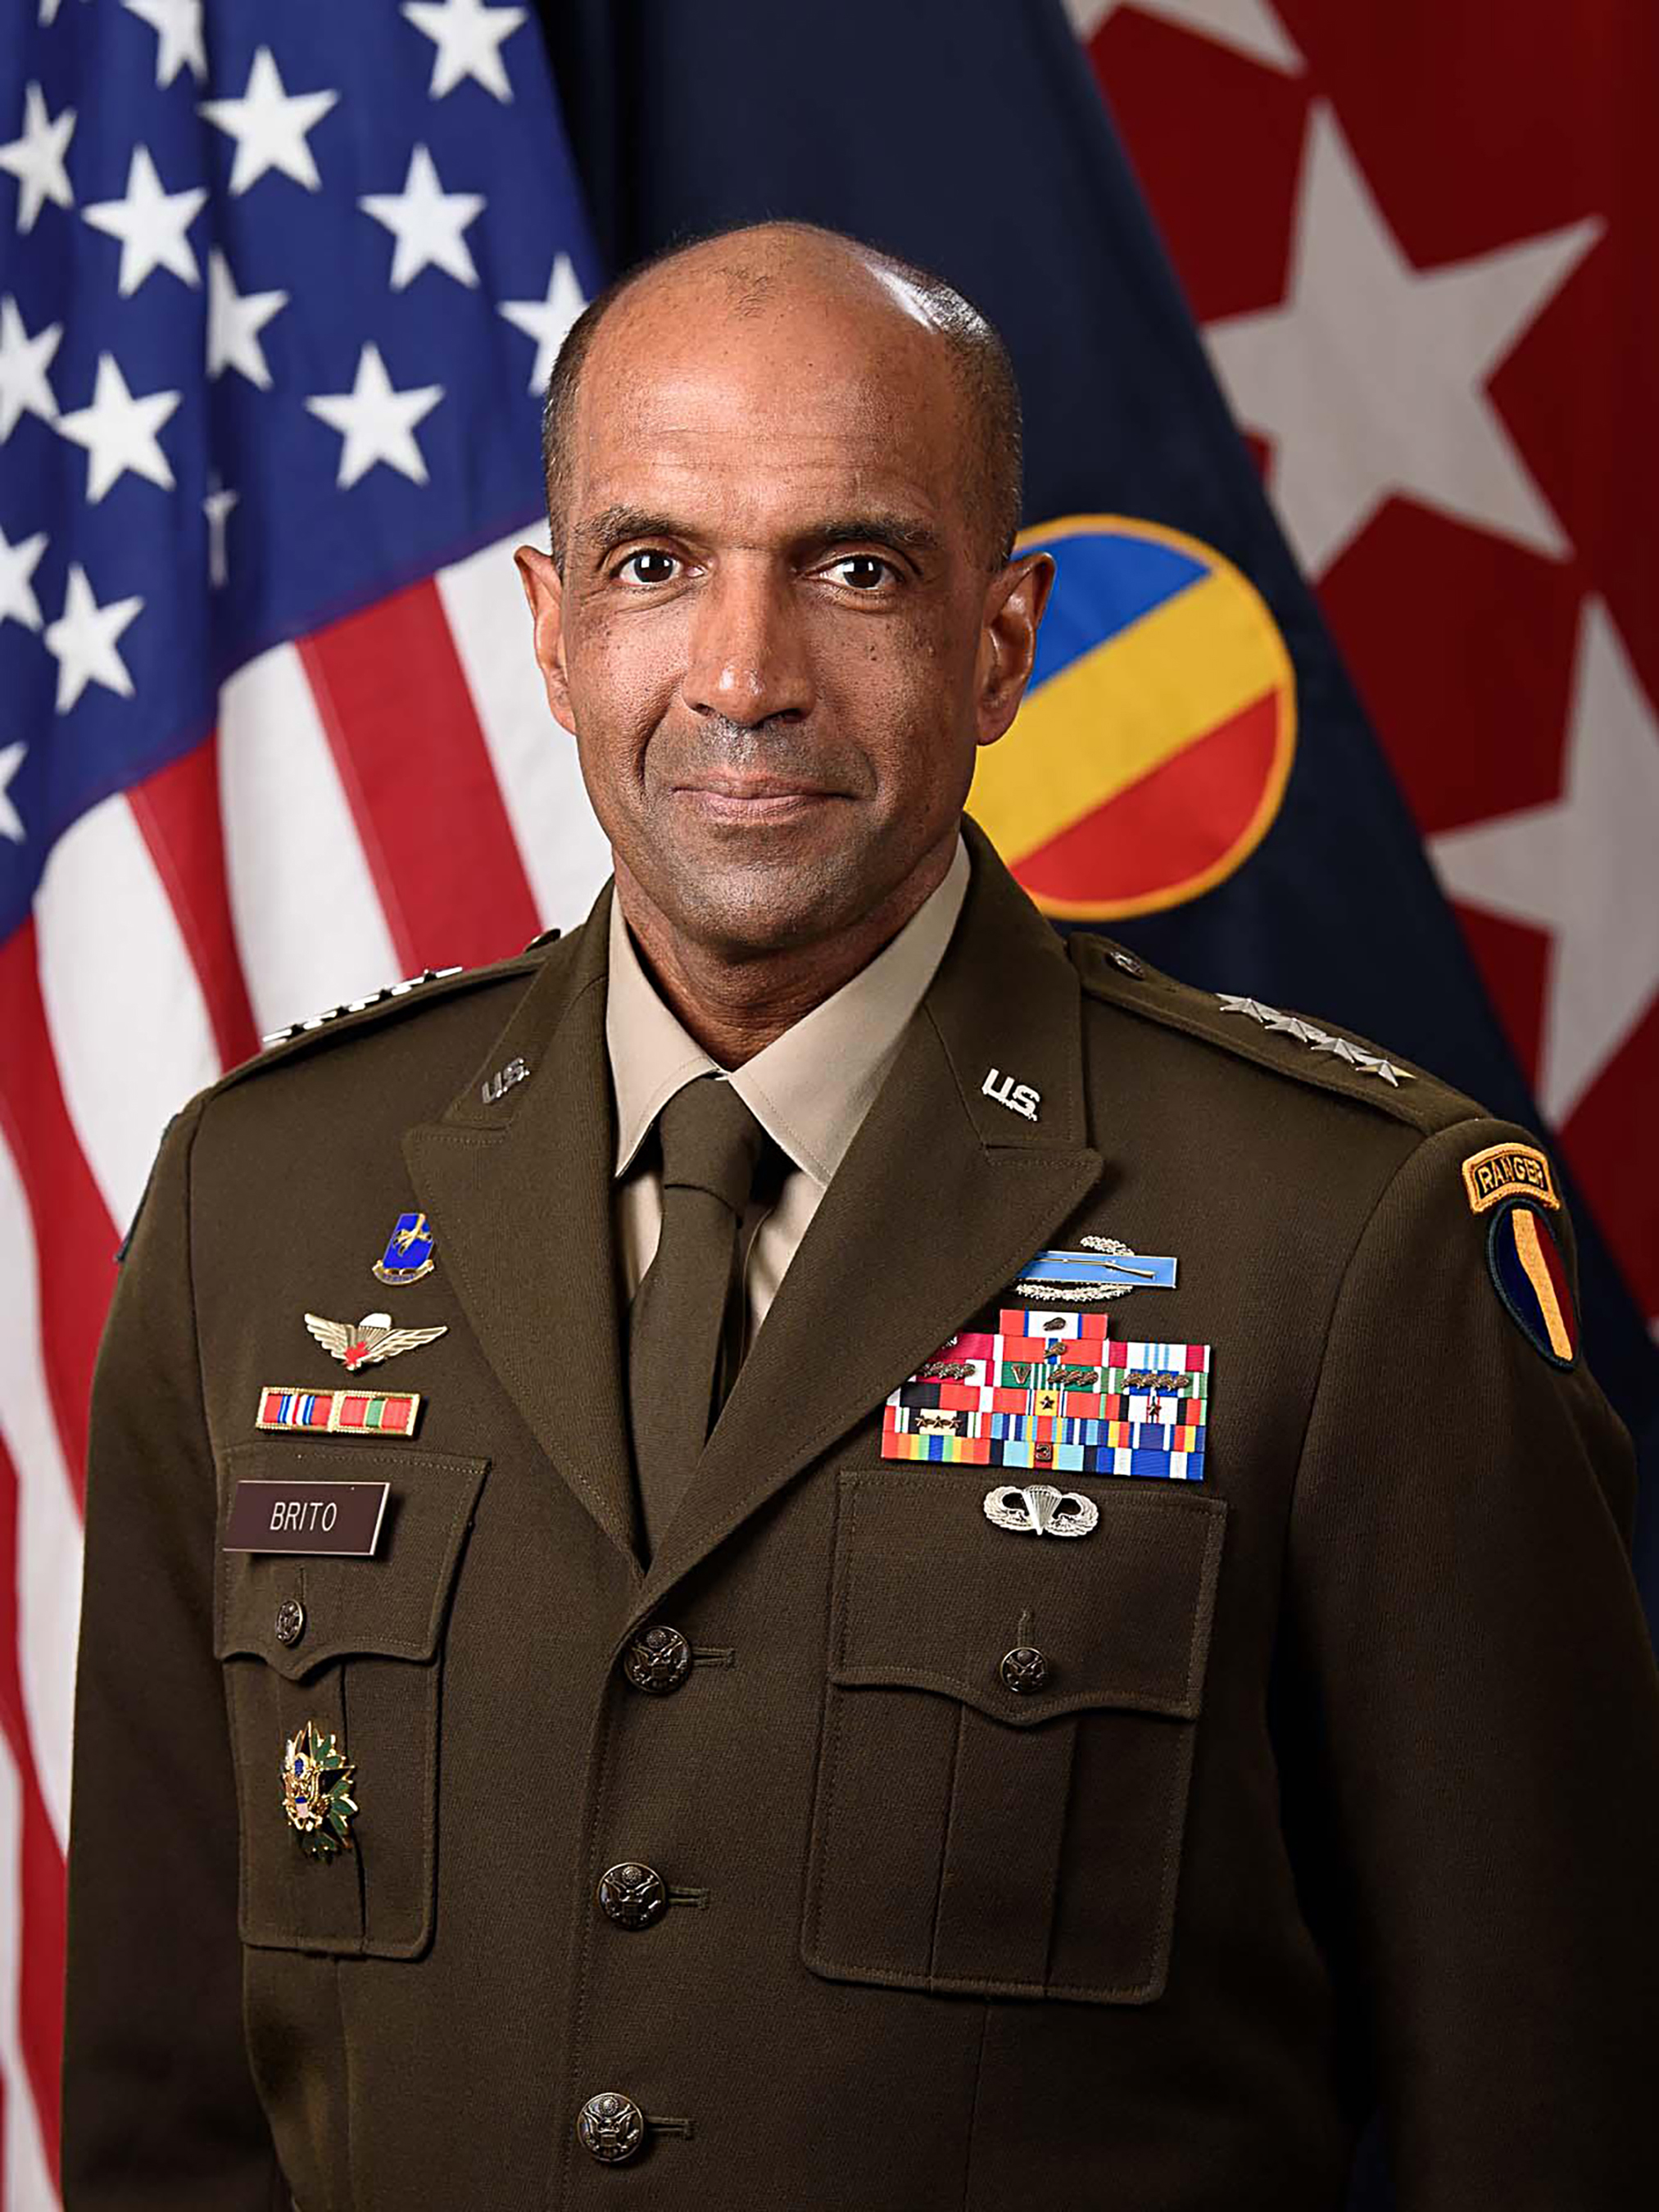 Gen. Gary Brito, U.S. Army photo by Jean Wines